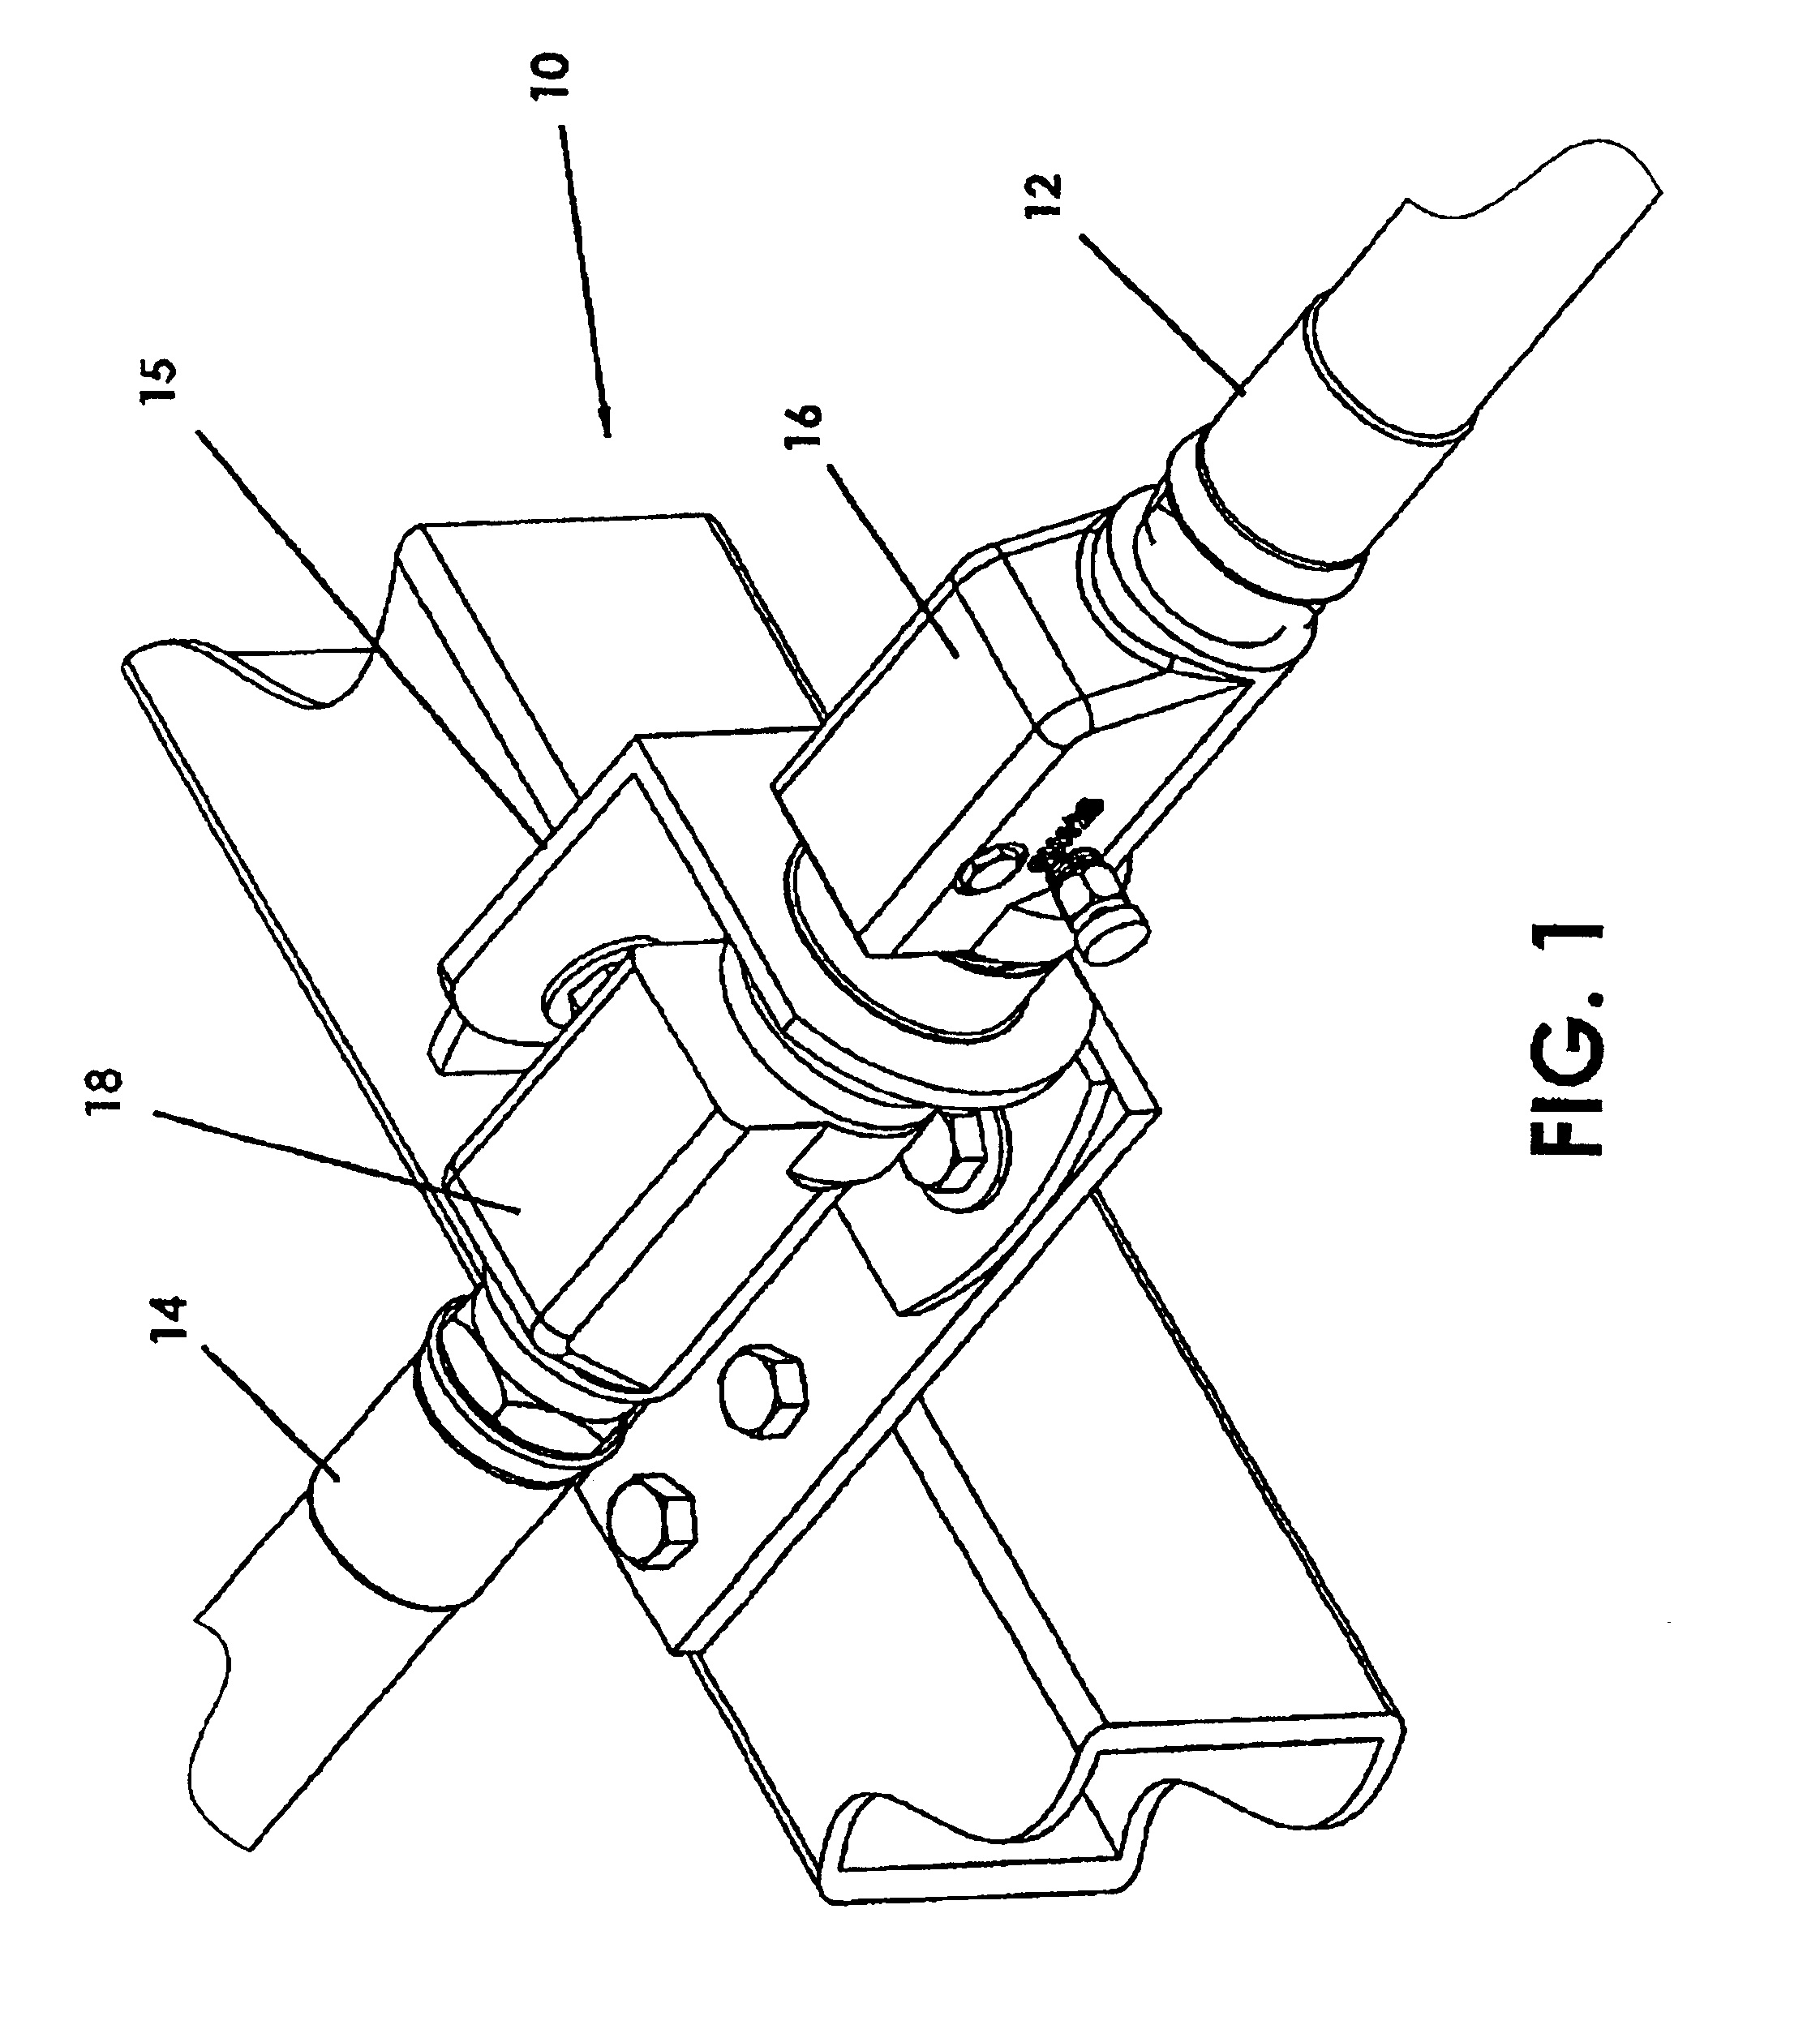 Breakaway coupling with flapper valve